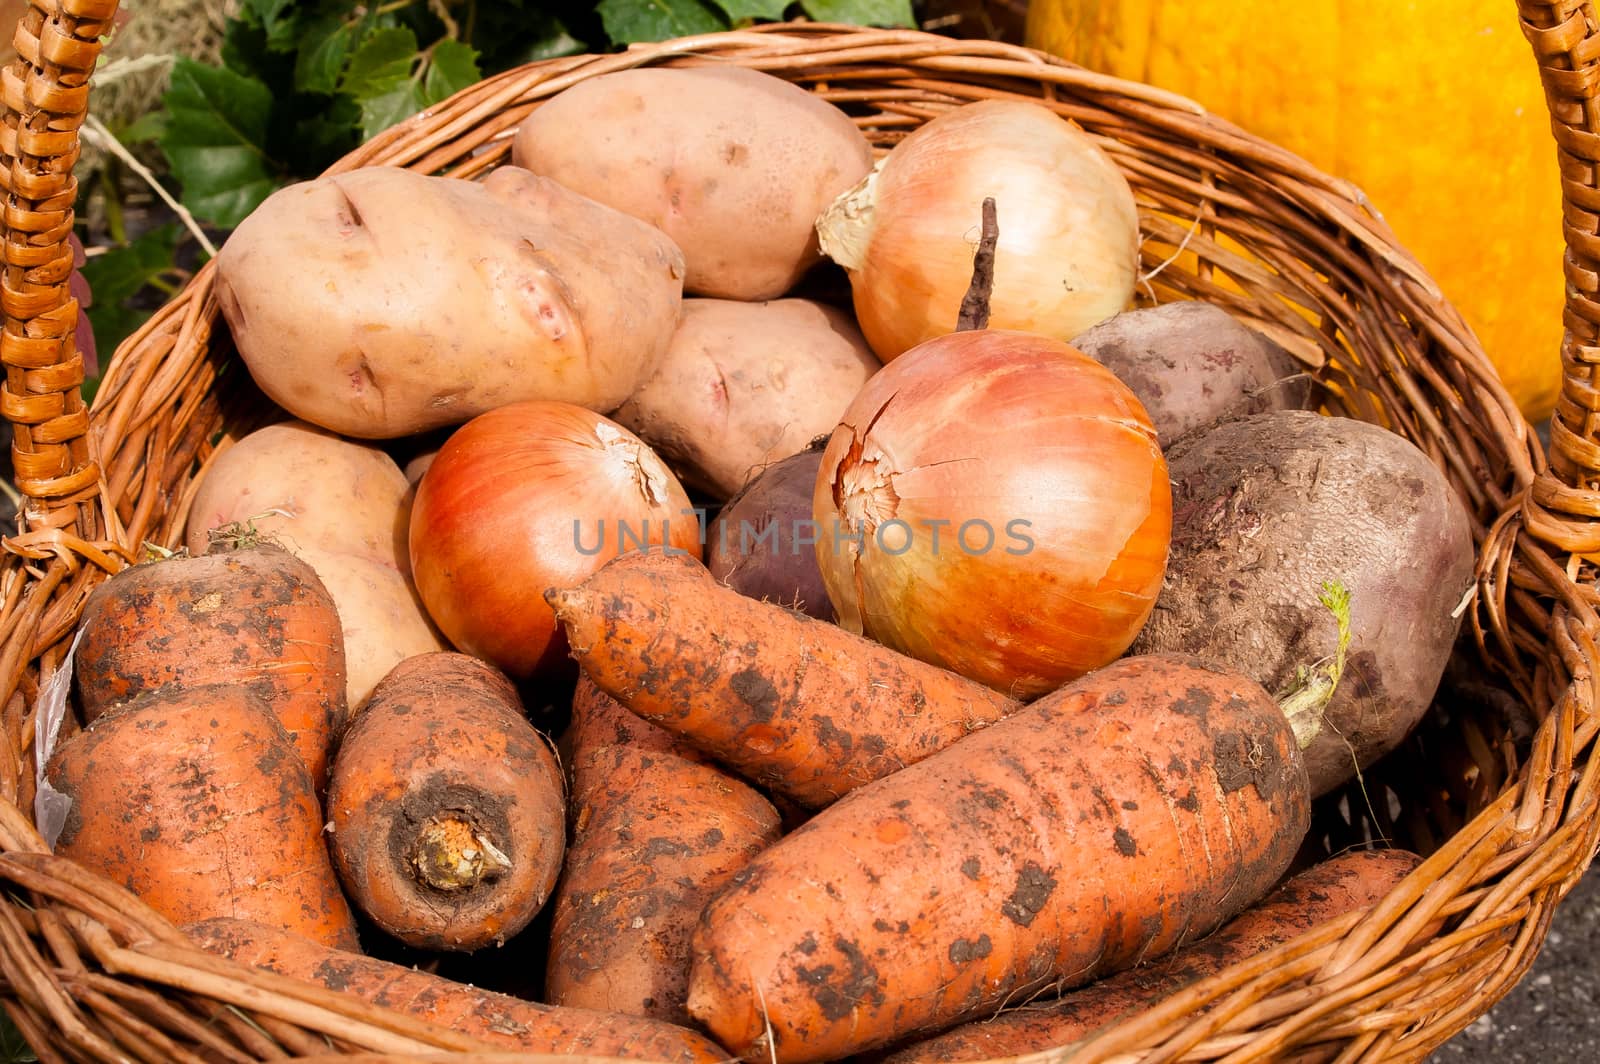 onions, potatoes, carrots, buriak lying in a basket  by antonius_